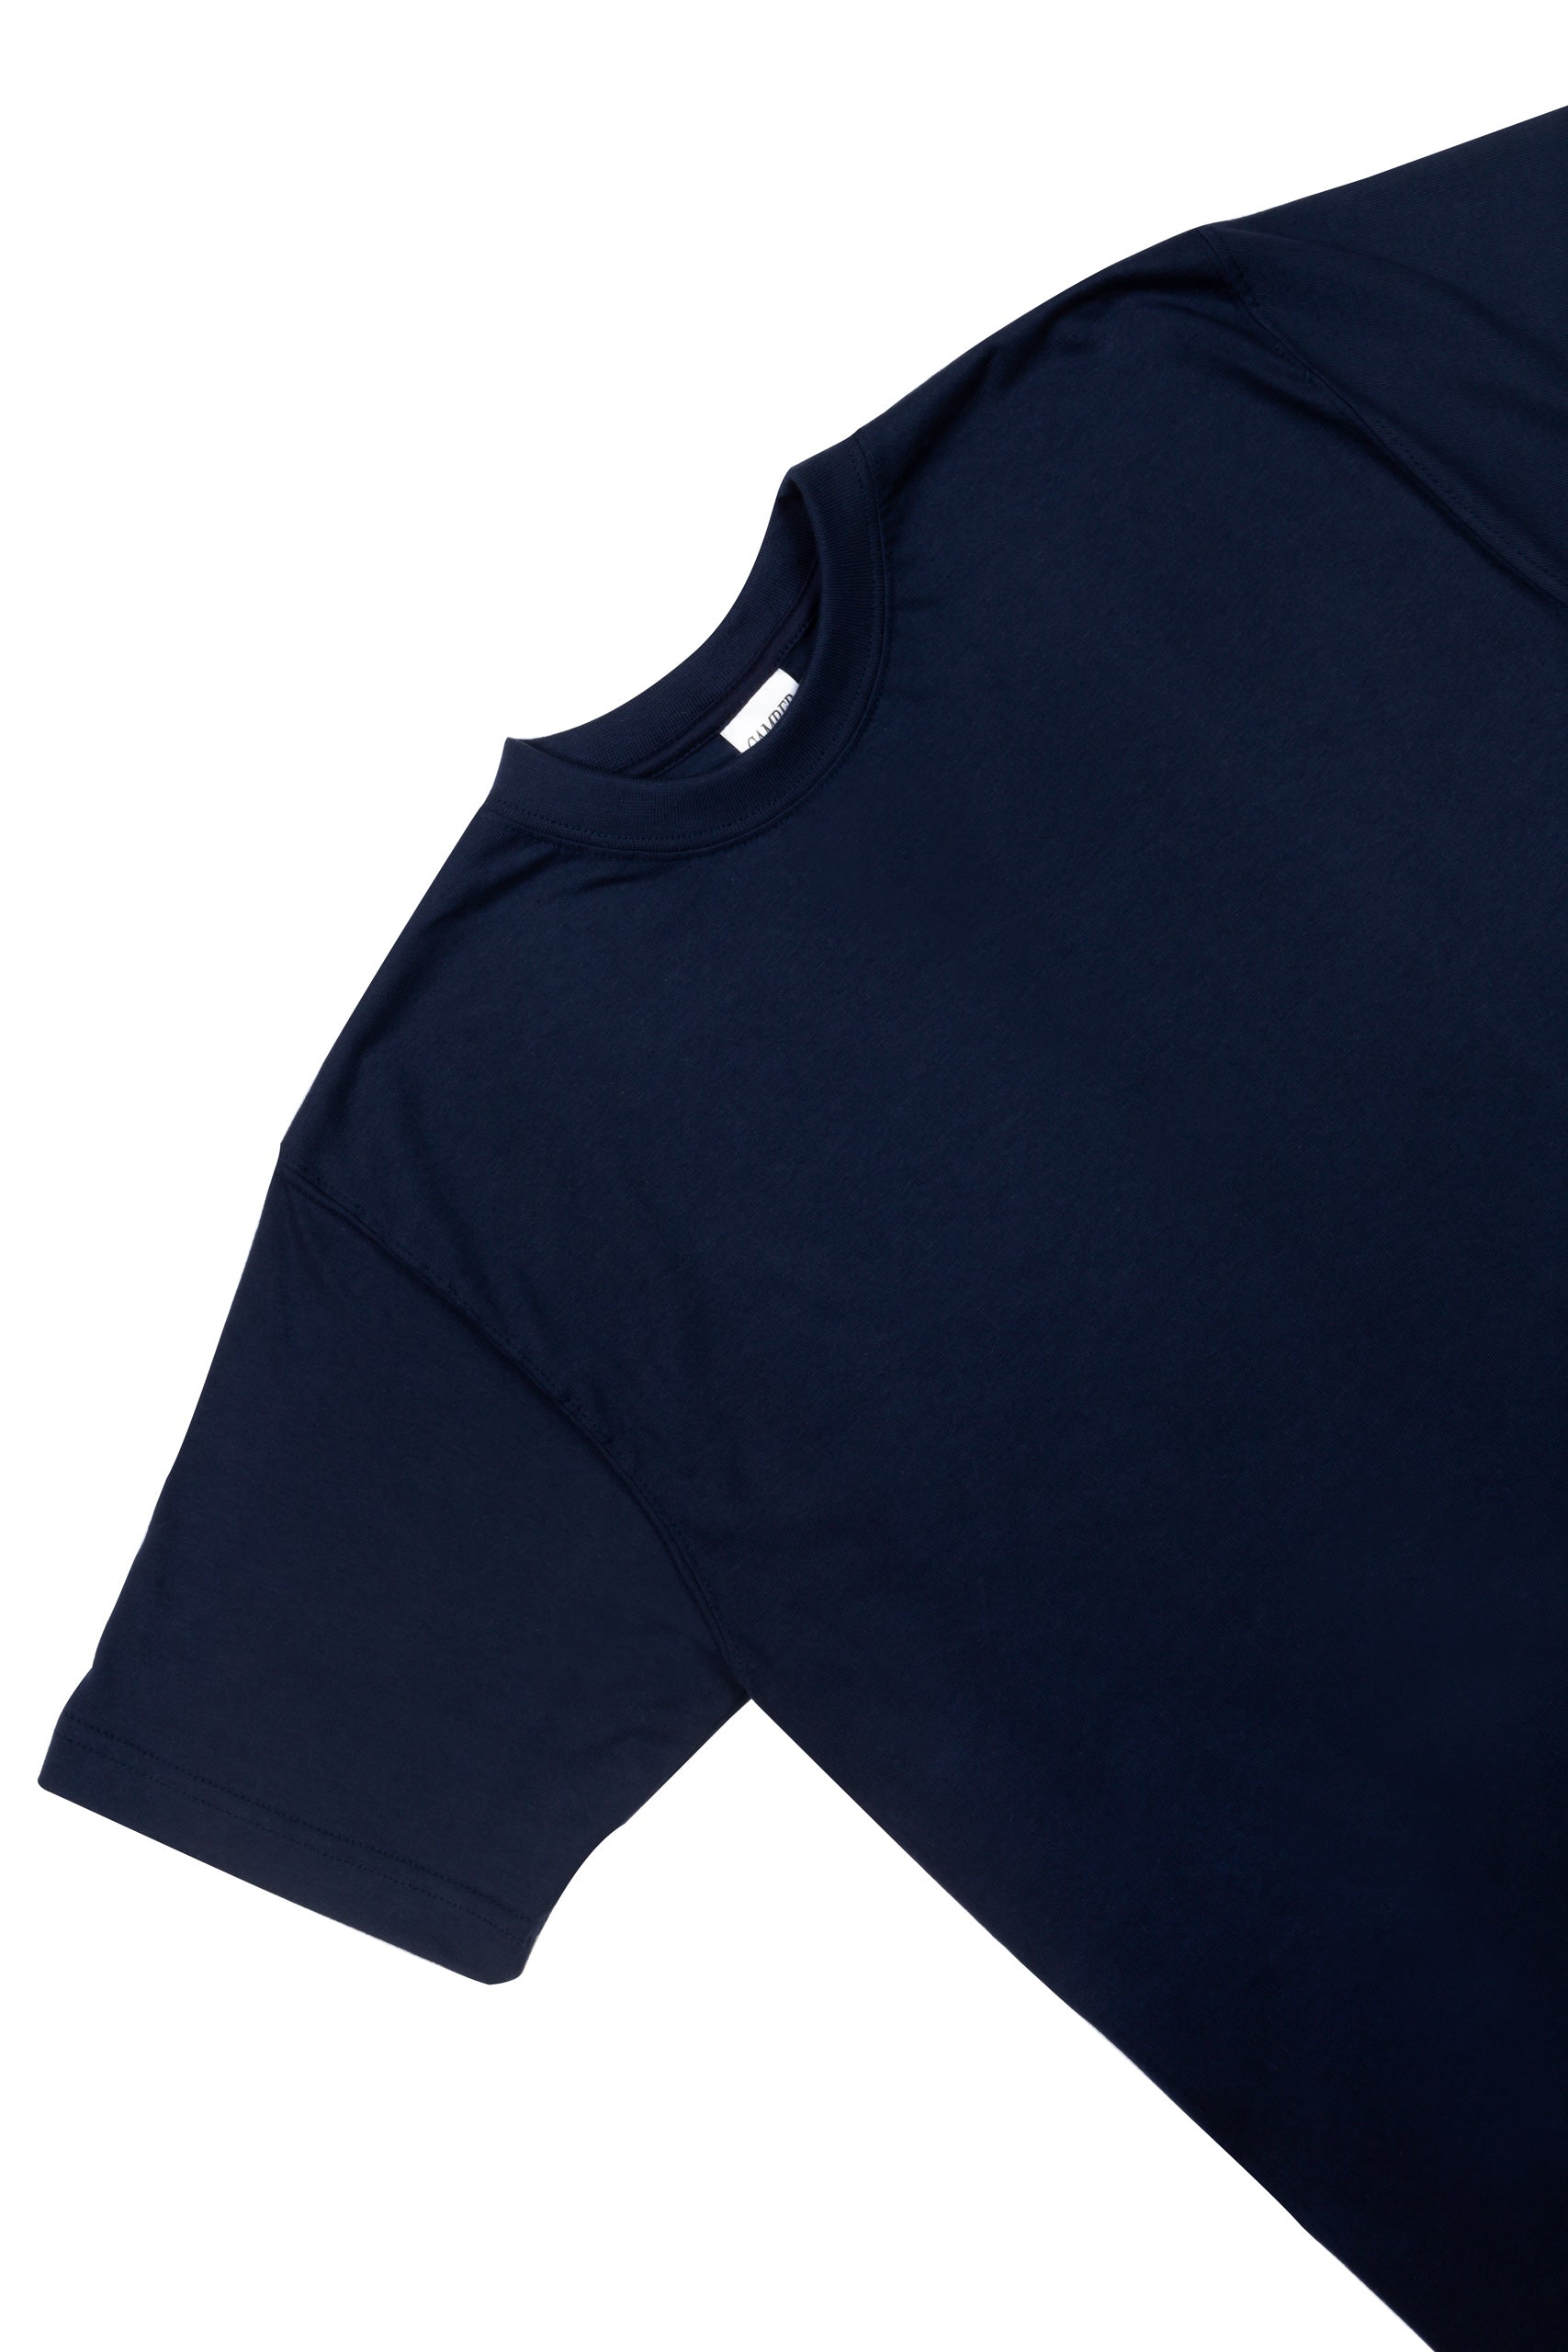 – Navy Camber Clothiers T-Shirt 701 USA 6oz Embark